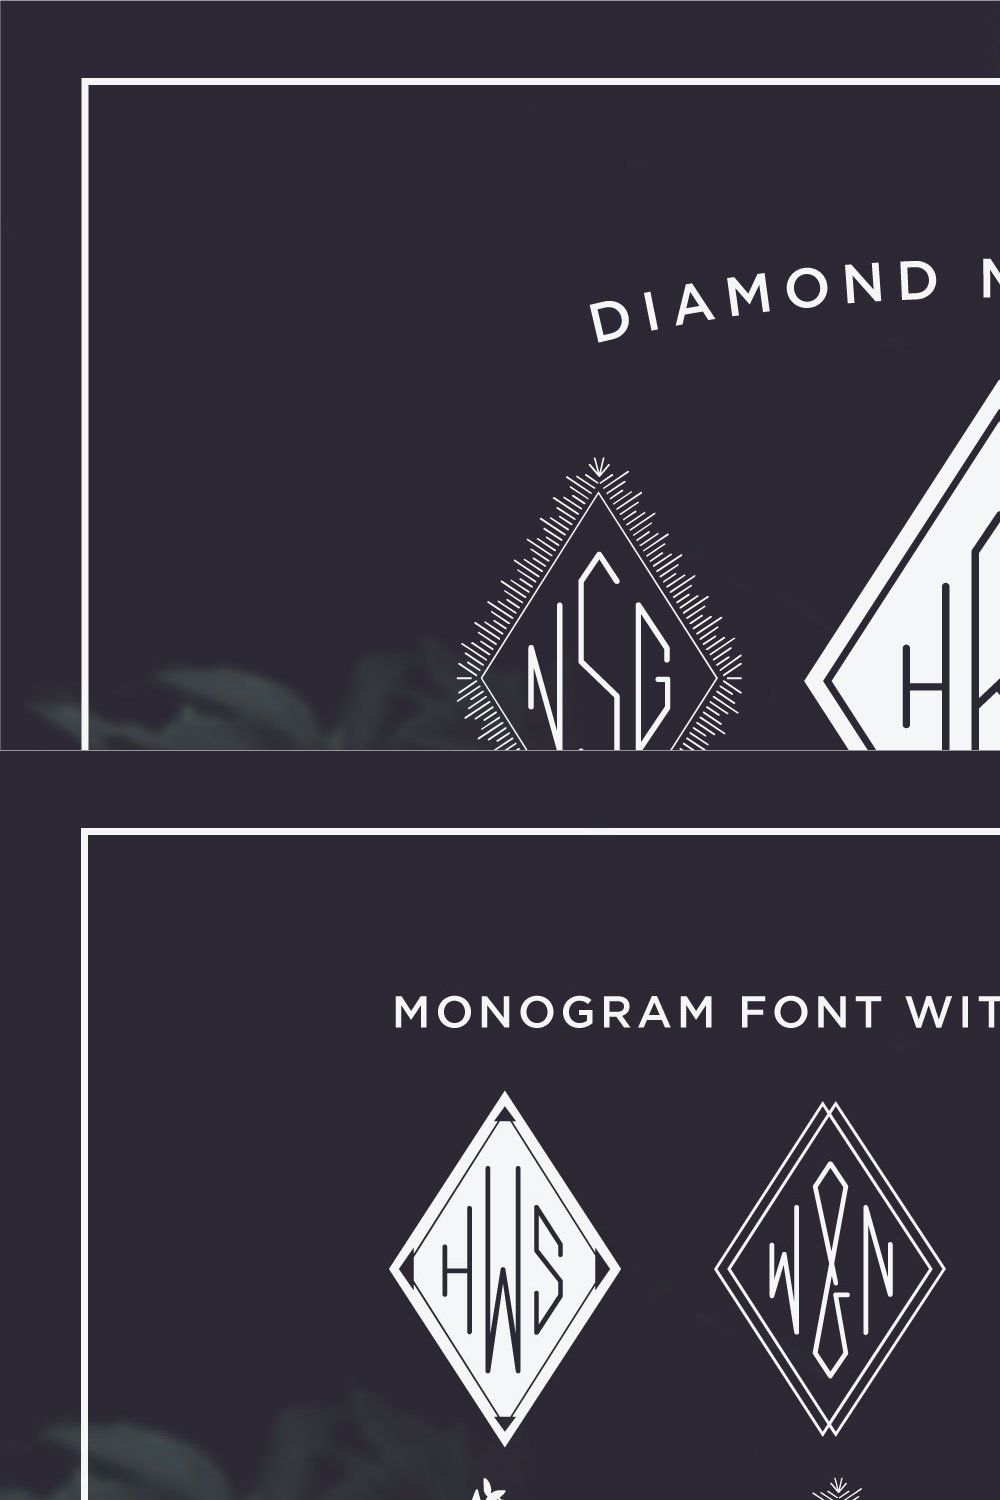 Diamond Monogram Font pinterest preview image.